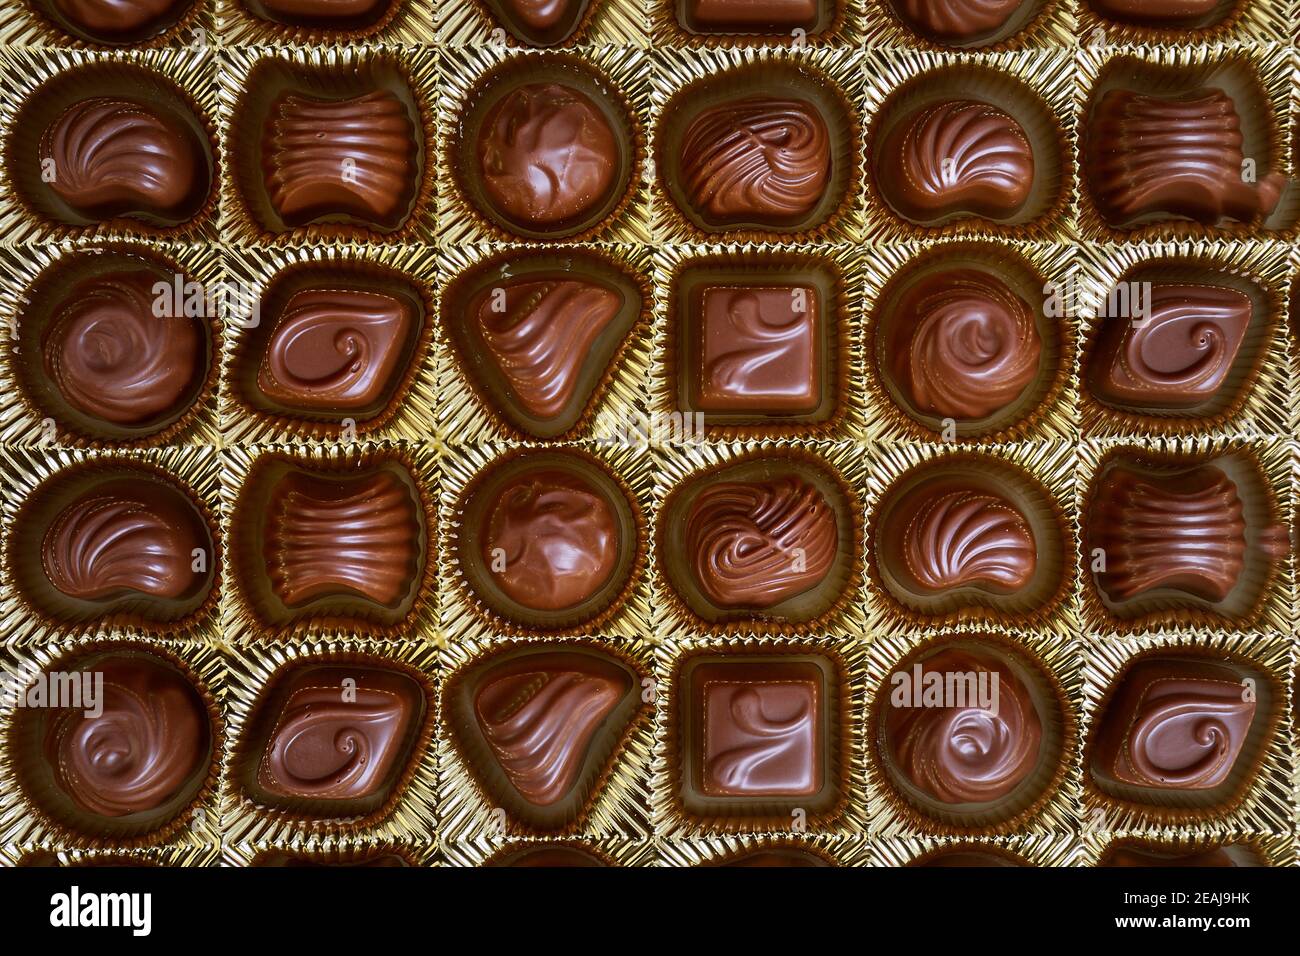 Open box of chocolate treets Stock Photo - Alamy